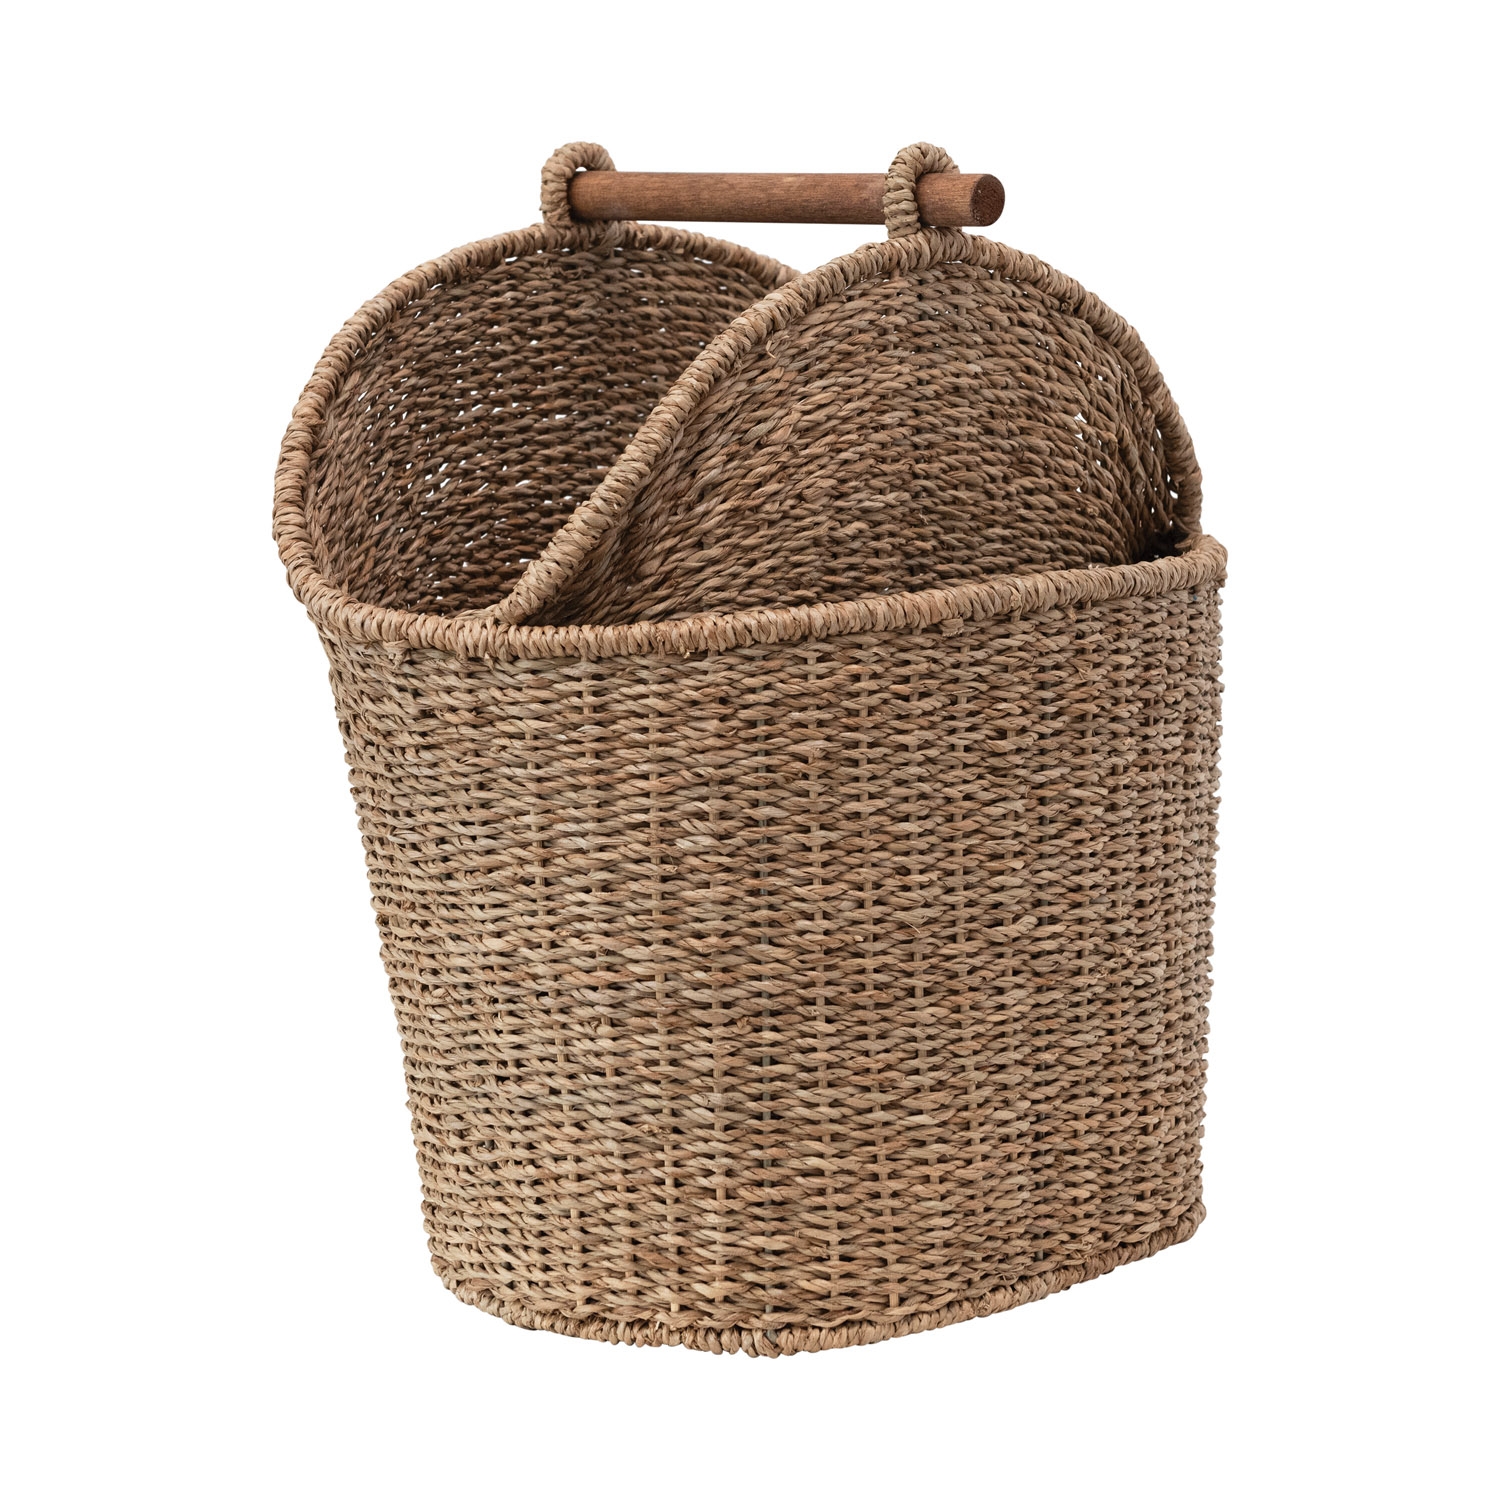 Oval Hand-Woven Bankuan Toilet Paper/Magazine Basket w/ Wood Handle, Natural - Image 0